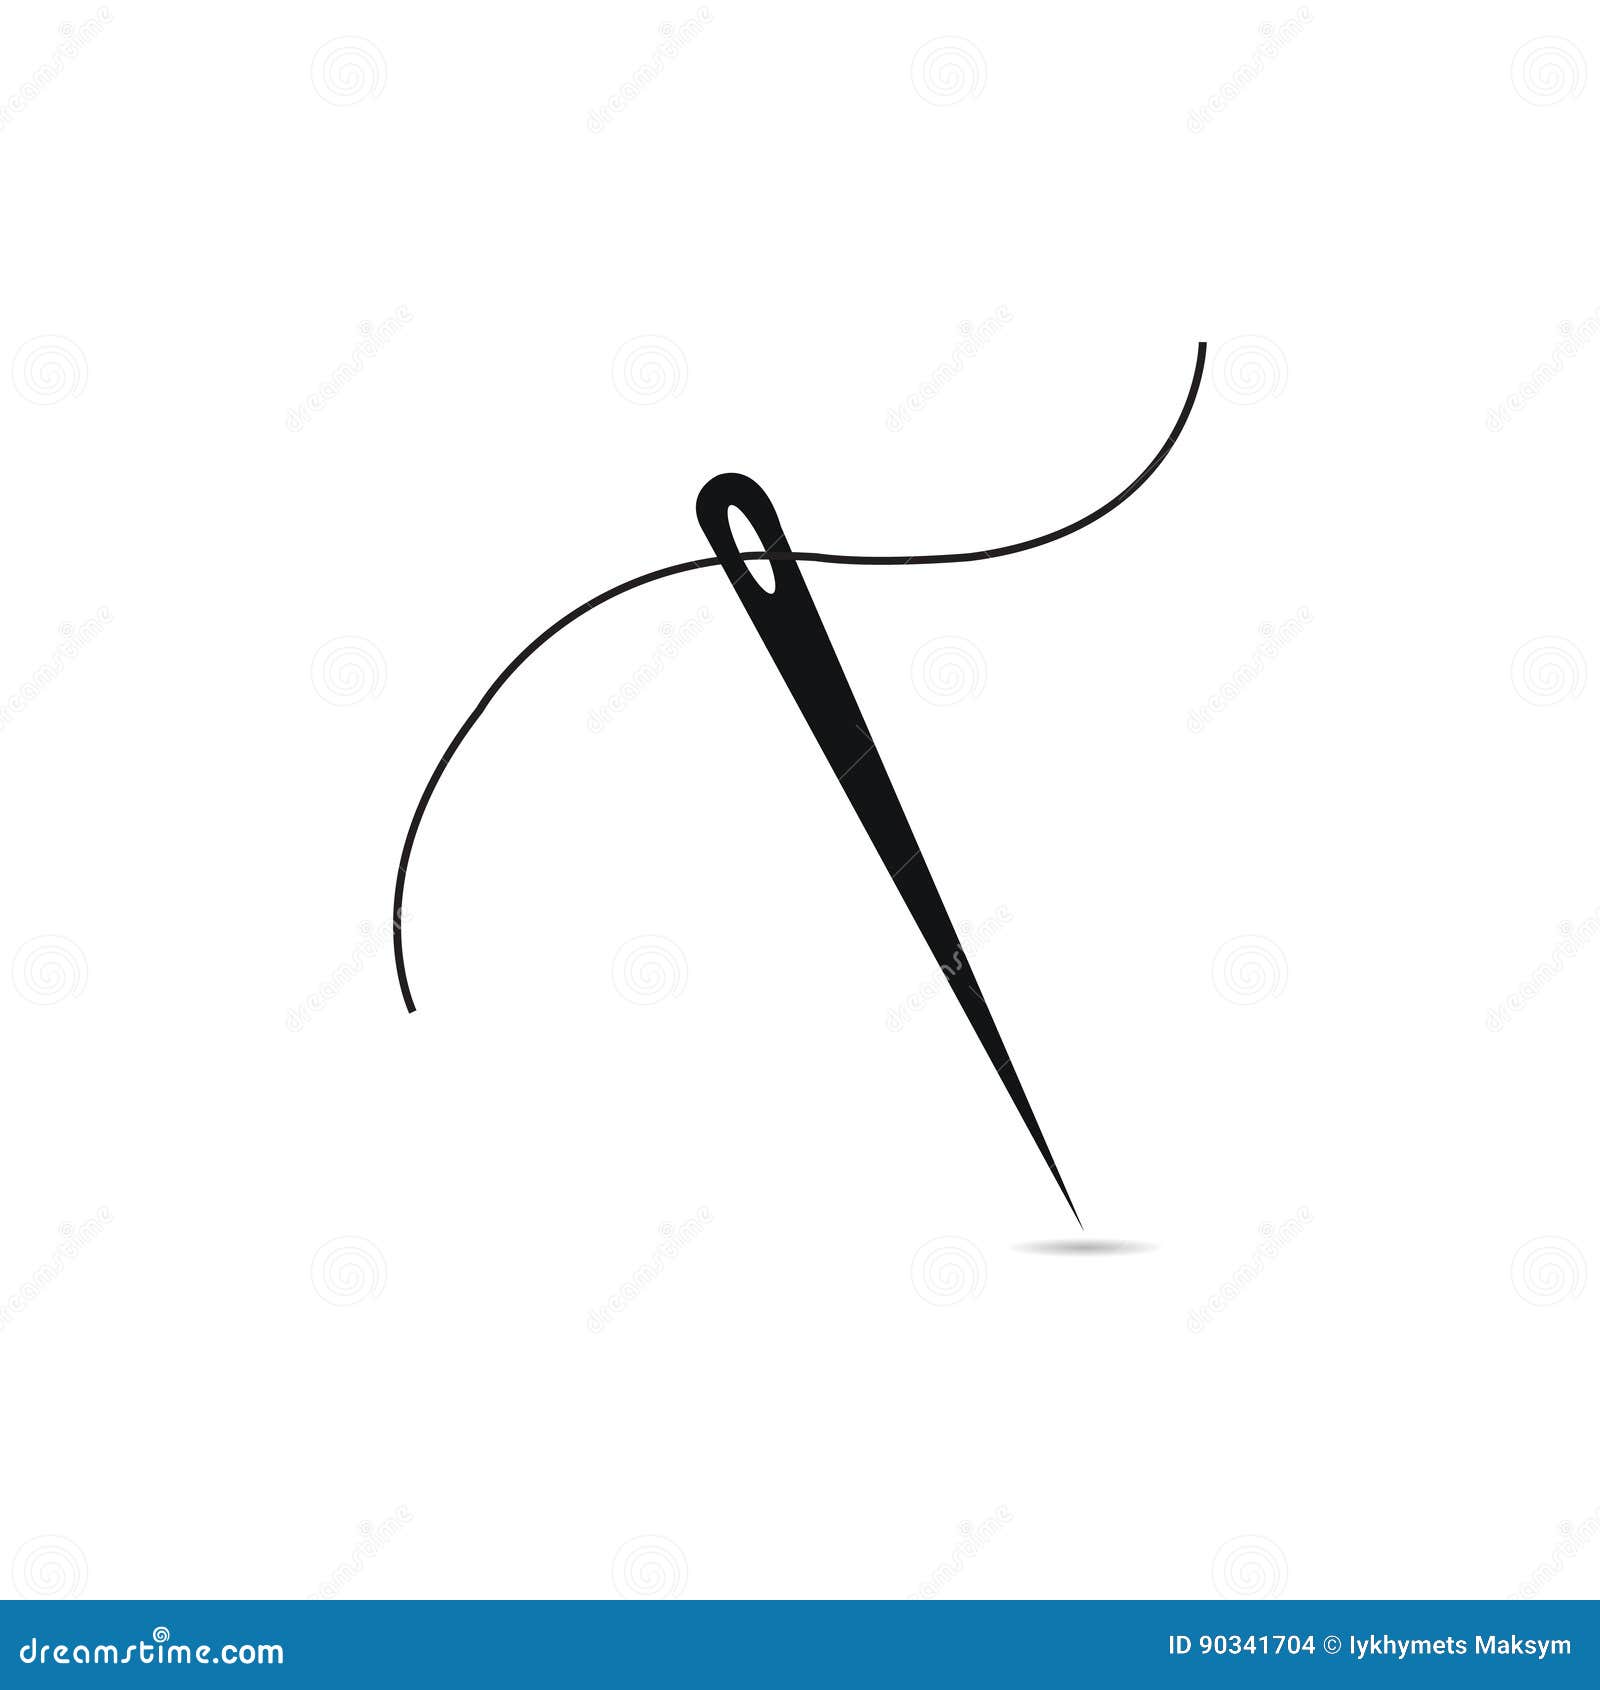 Needle with thread icon stock illustration. Illustration of needle ...